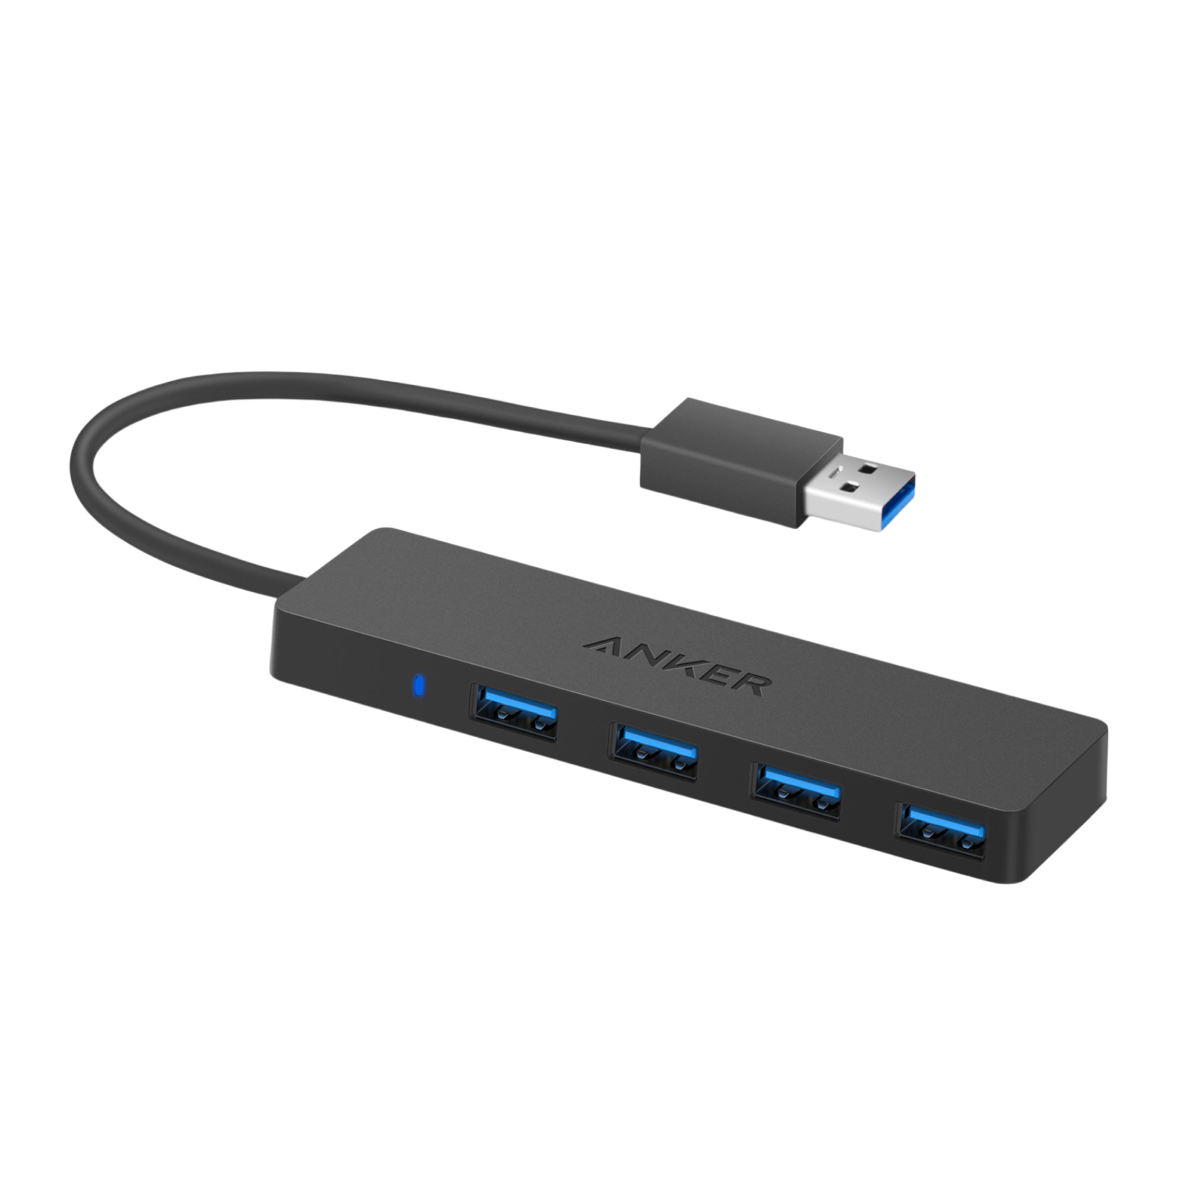 Ultra Slim 4-Port USB 3.0 Data Hub - Anker Canada